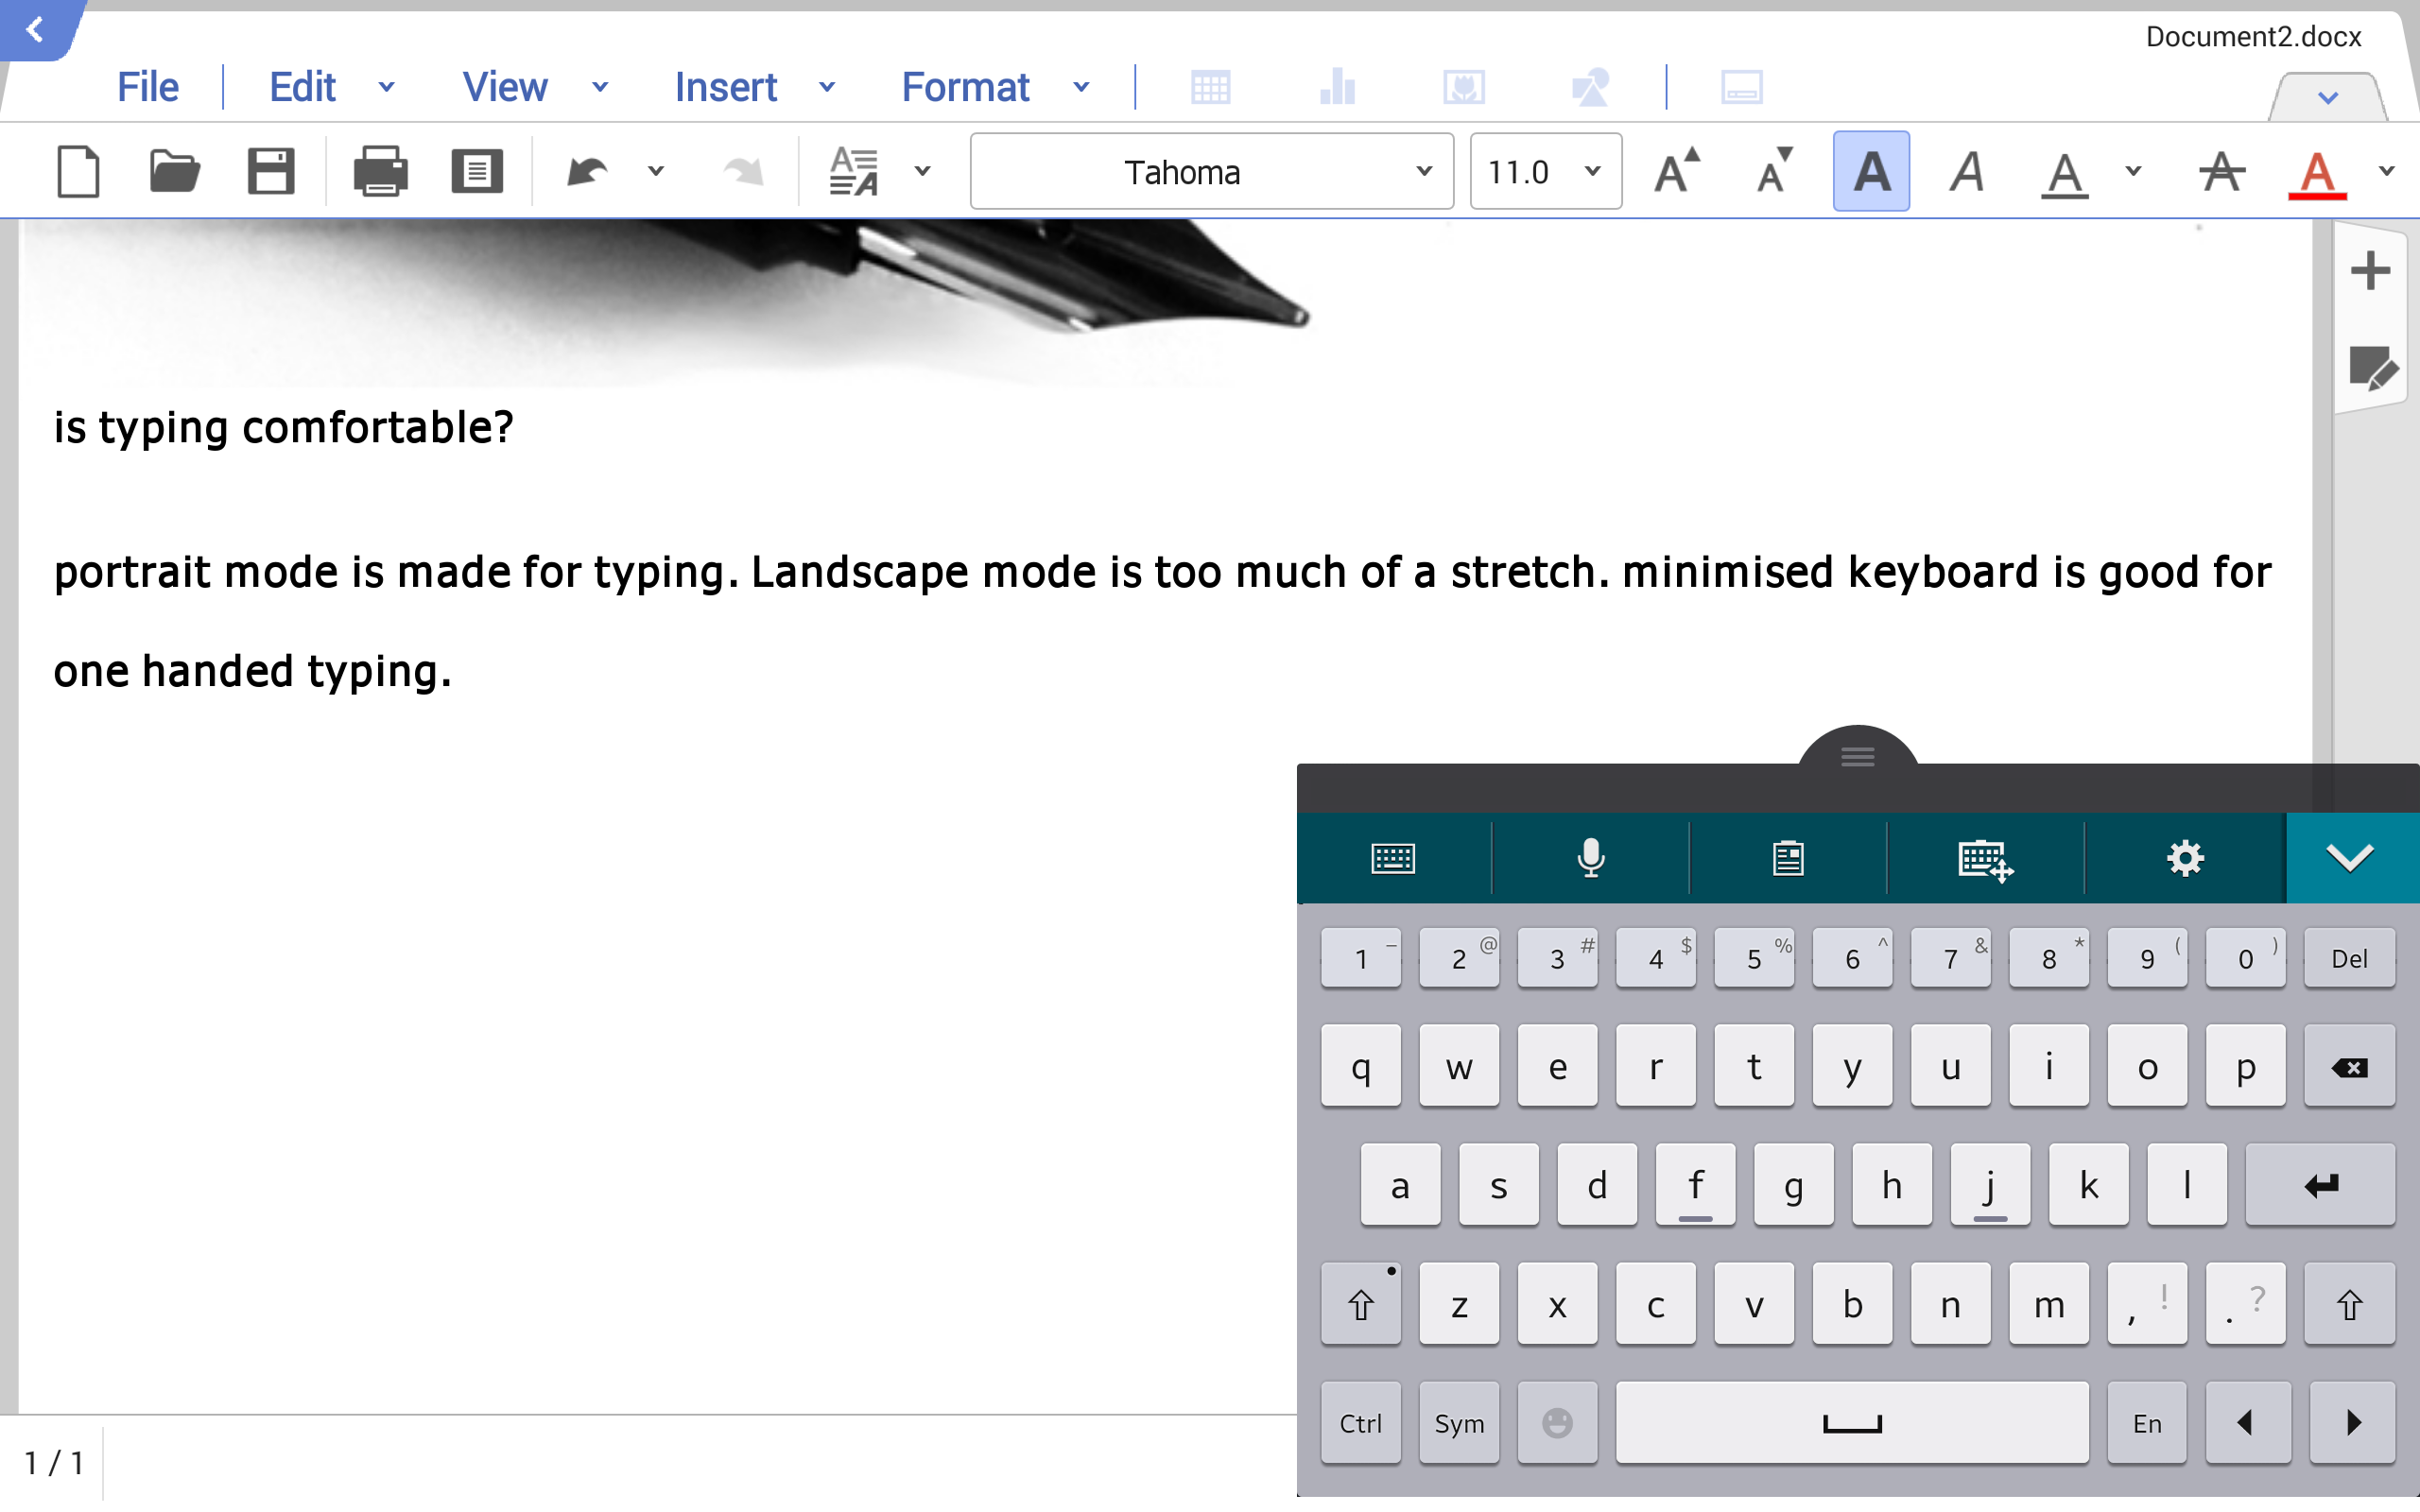 samsung galaxy tab pro ycp review landscape mode minimized keyboard